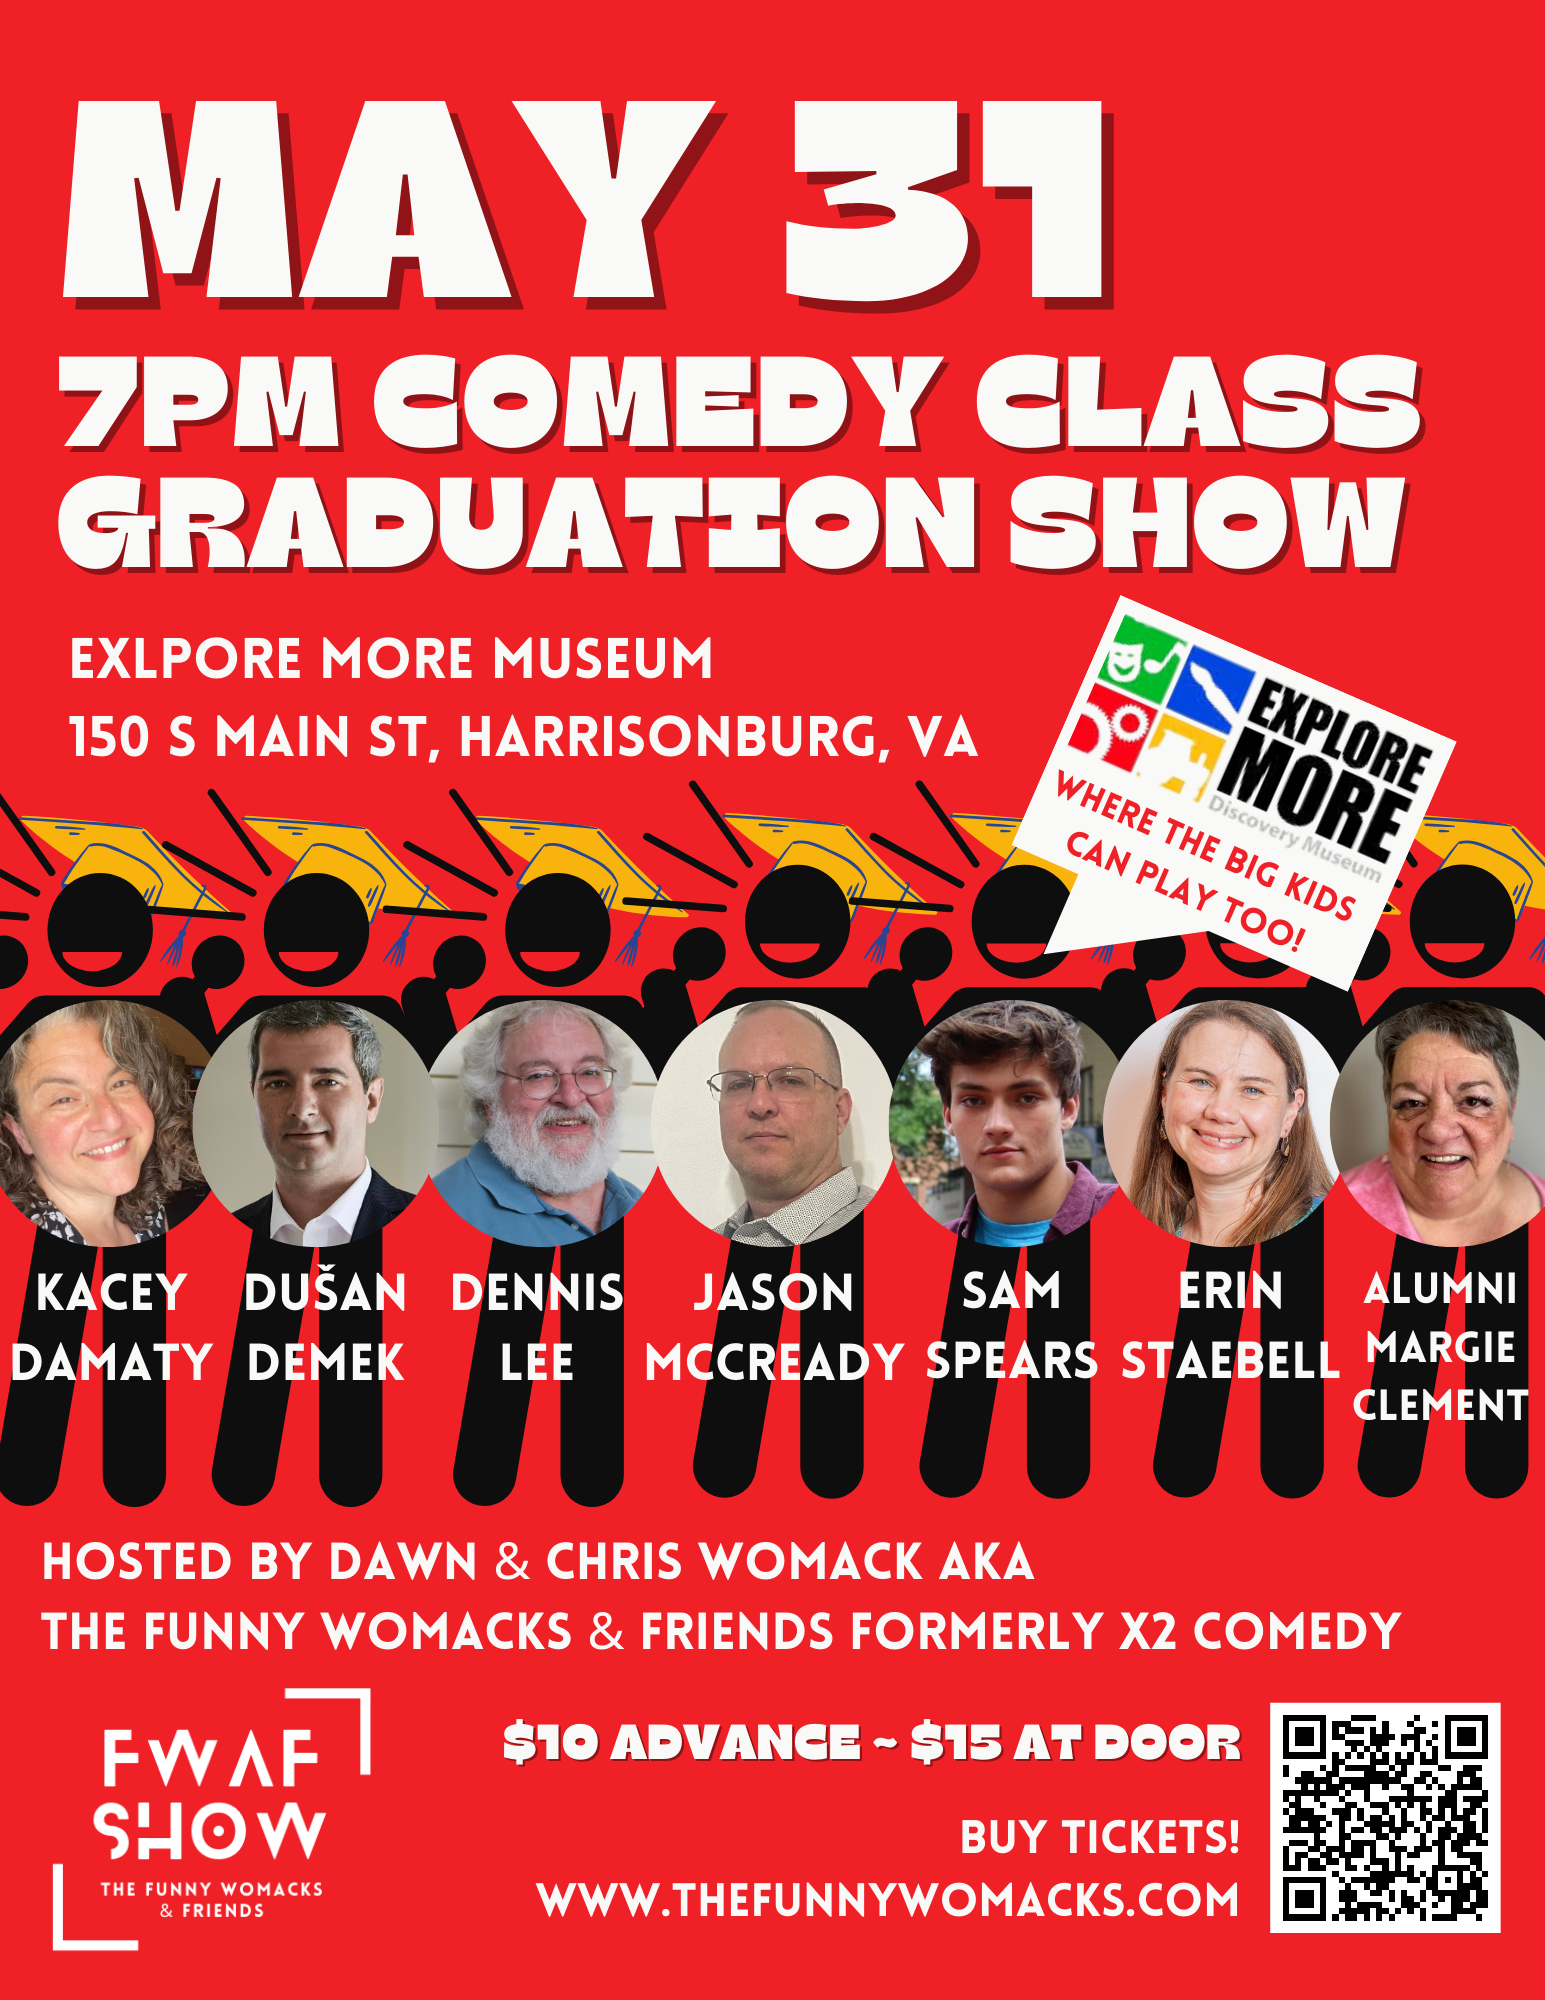 Comedy Class Grad event poster graphic